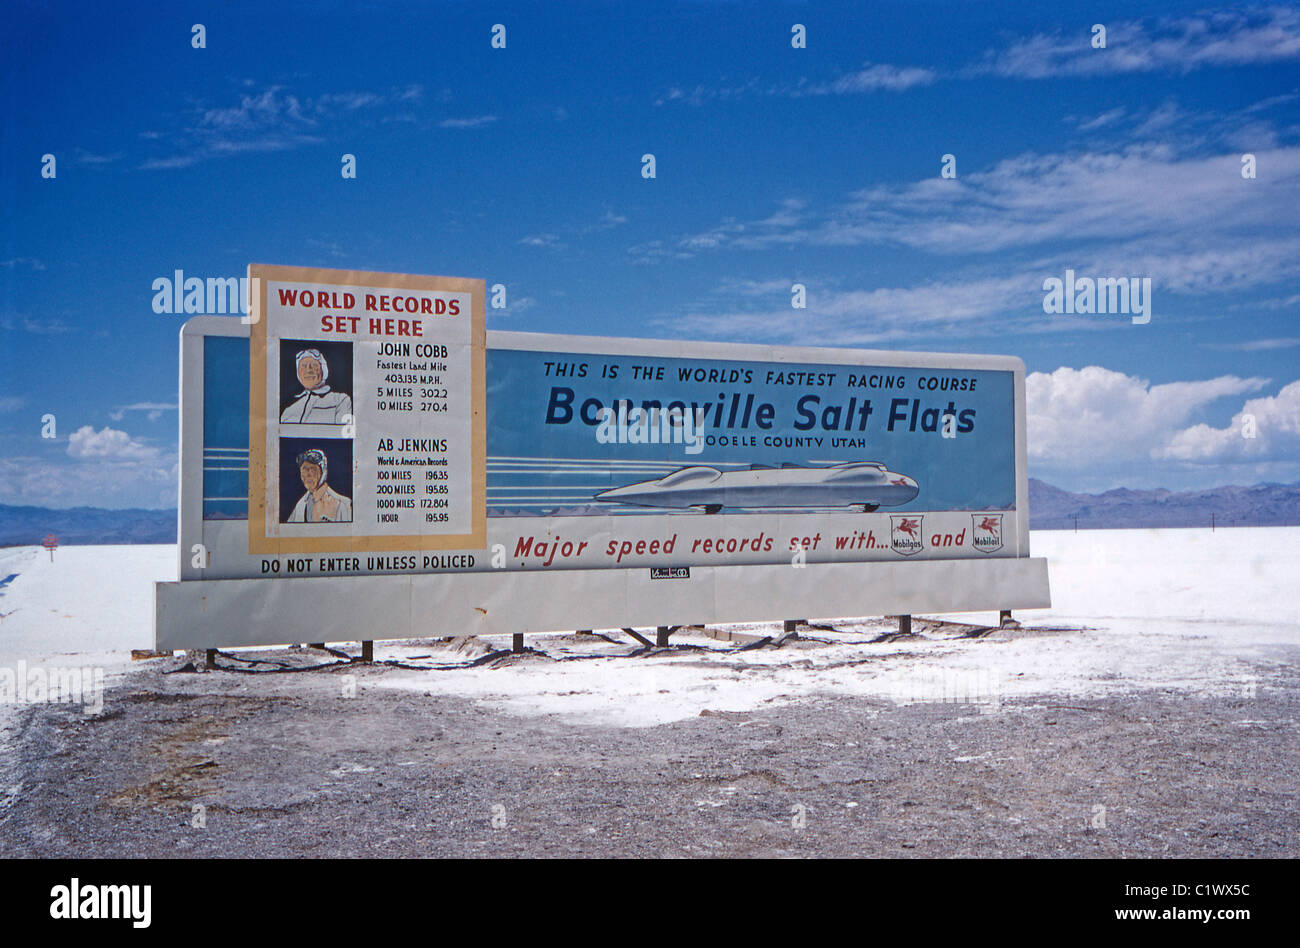 Affissioni, Bonneville Saline, Utah, Stati Uniti d'America, c. 1956 mostra che è stata la casa di land speed record mondiale (John Cobb e Ab Jenkins) Foto Stock